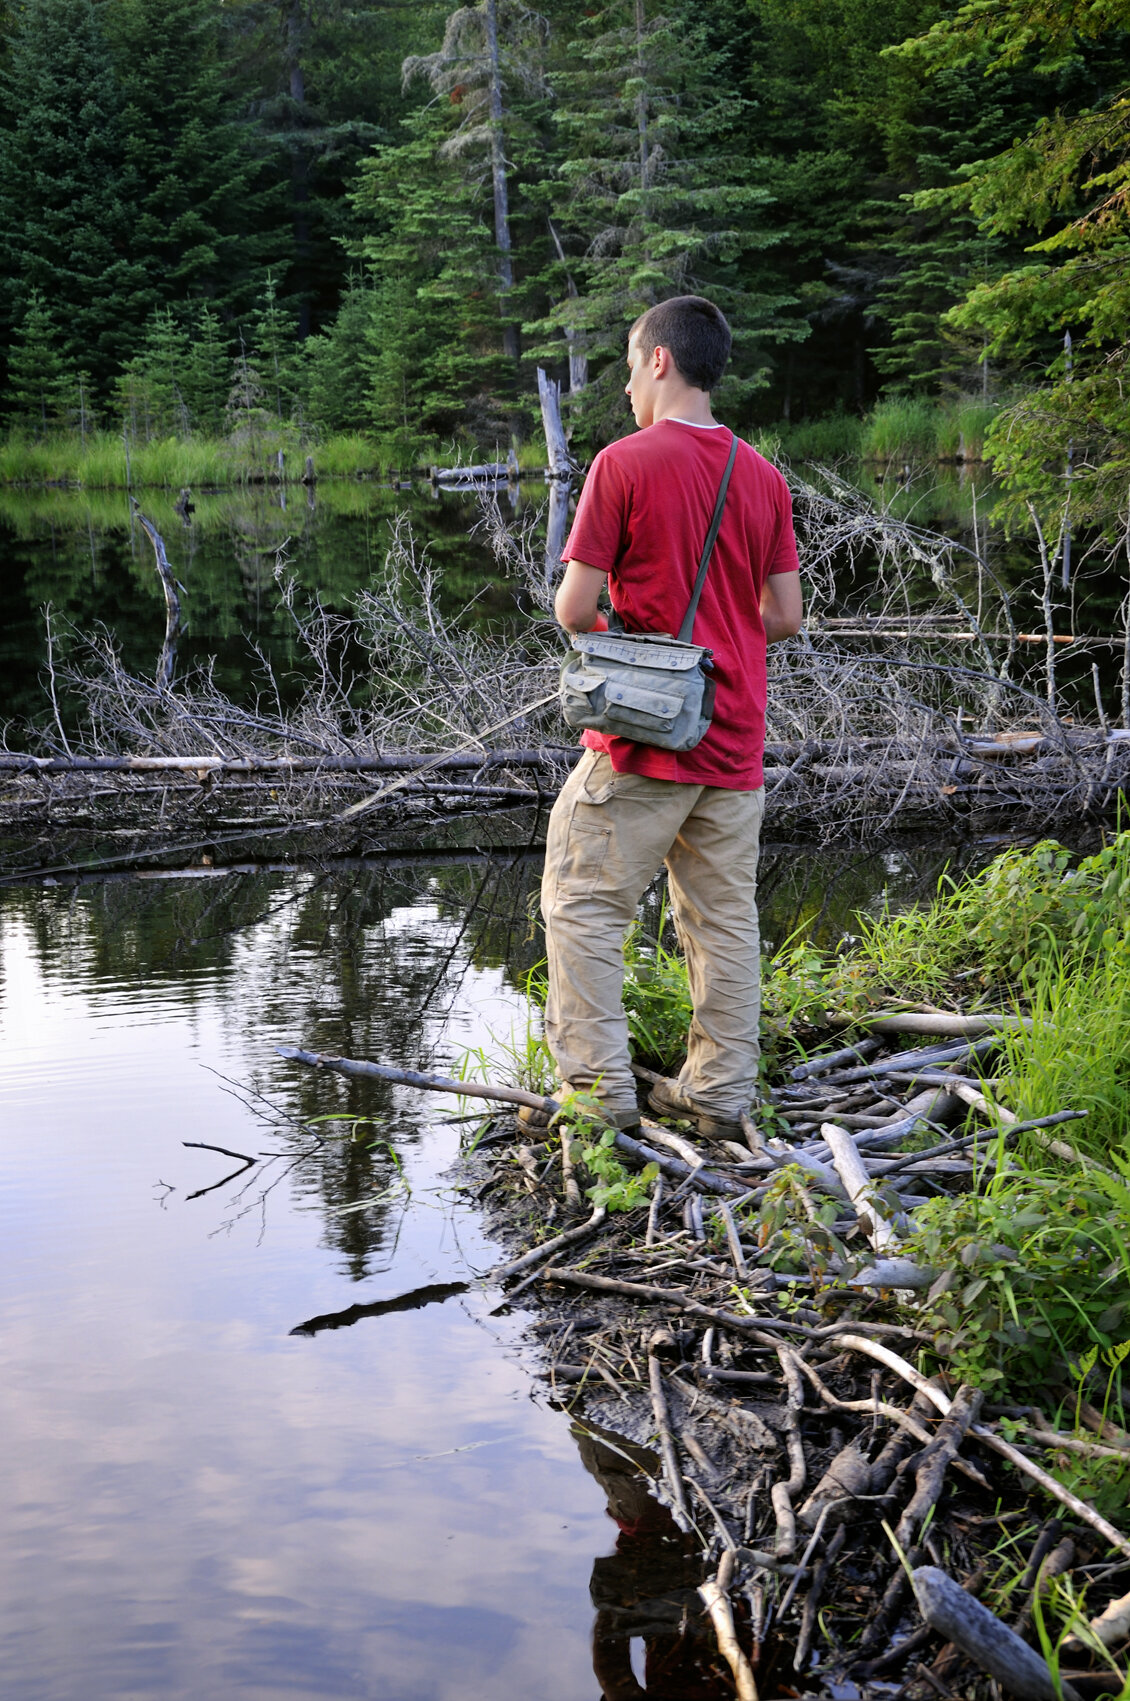 Teen-Fisherman-Targets-Trout-in-Mountain-Beaver-Pond-471264007_1130x1701.jpeg